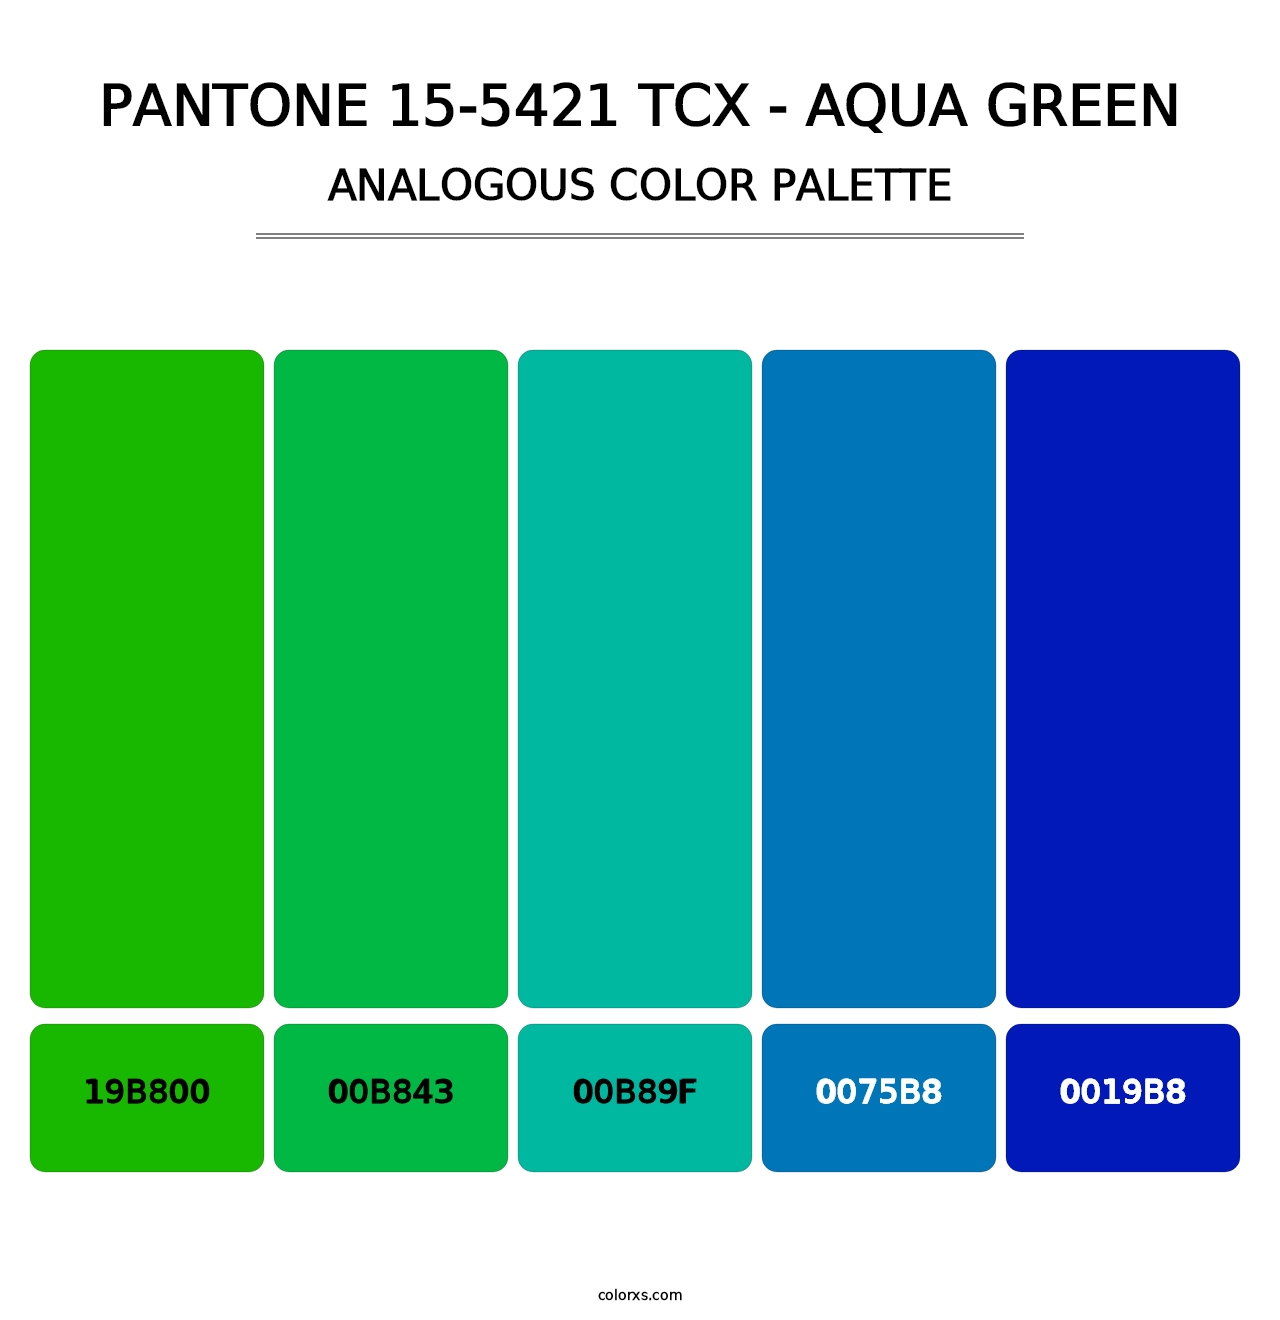 PANTONE 15-5421 TCX - Aqua Green - Analogous Color Palette